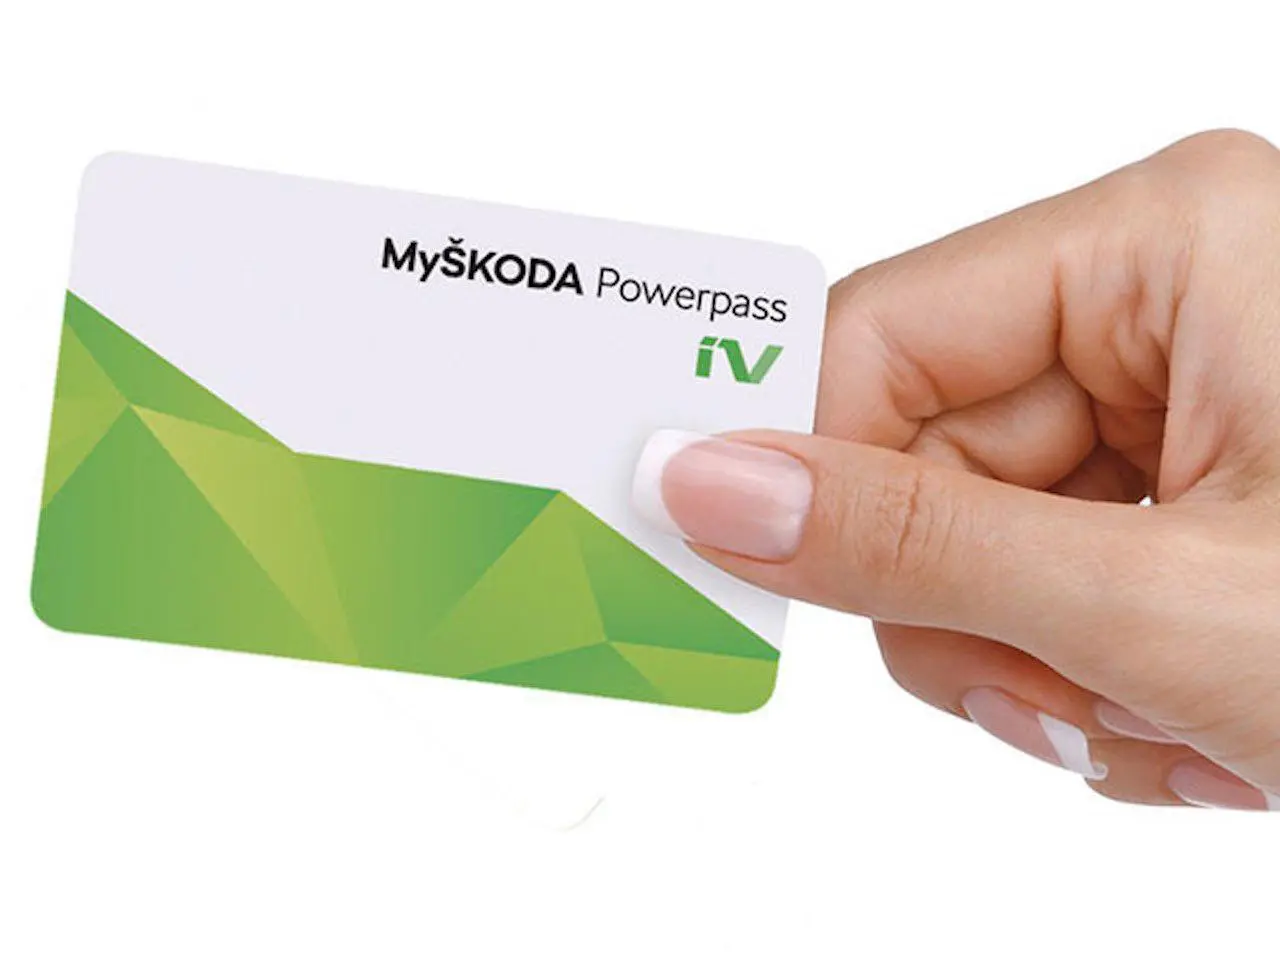 MySkoda Powerpass